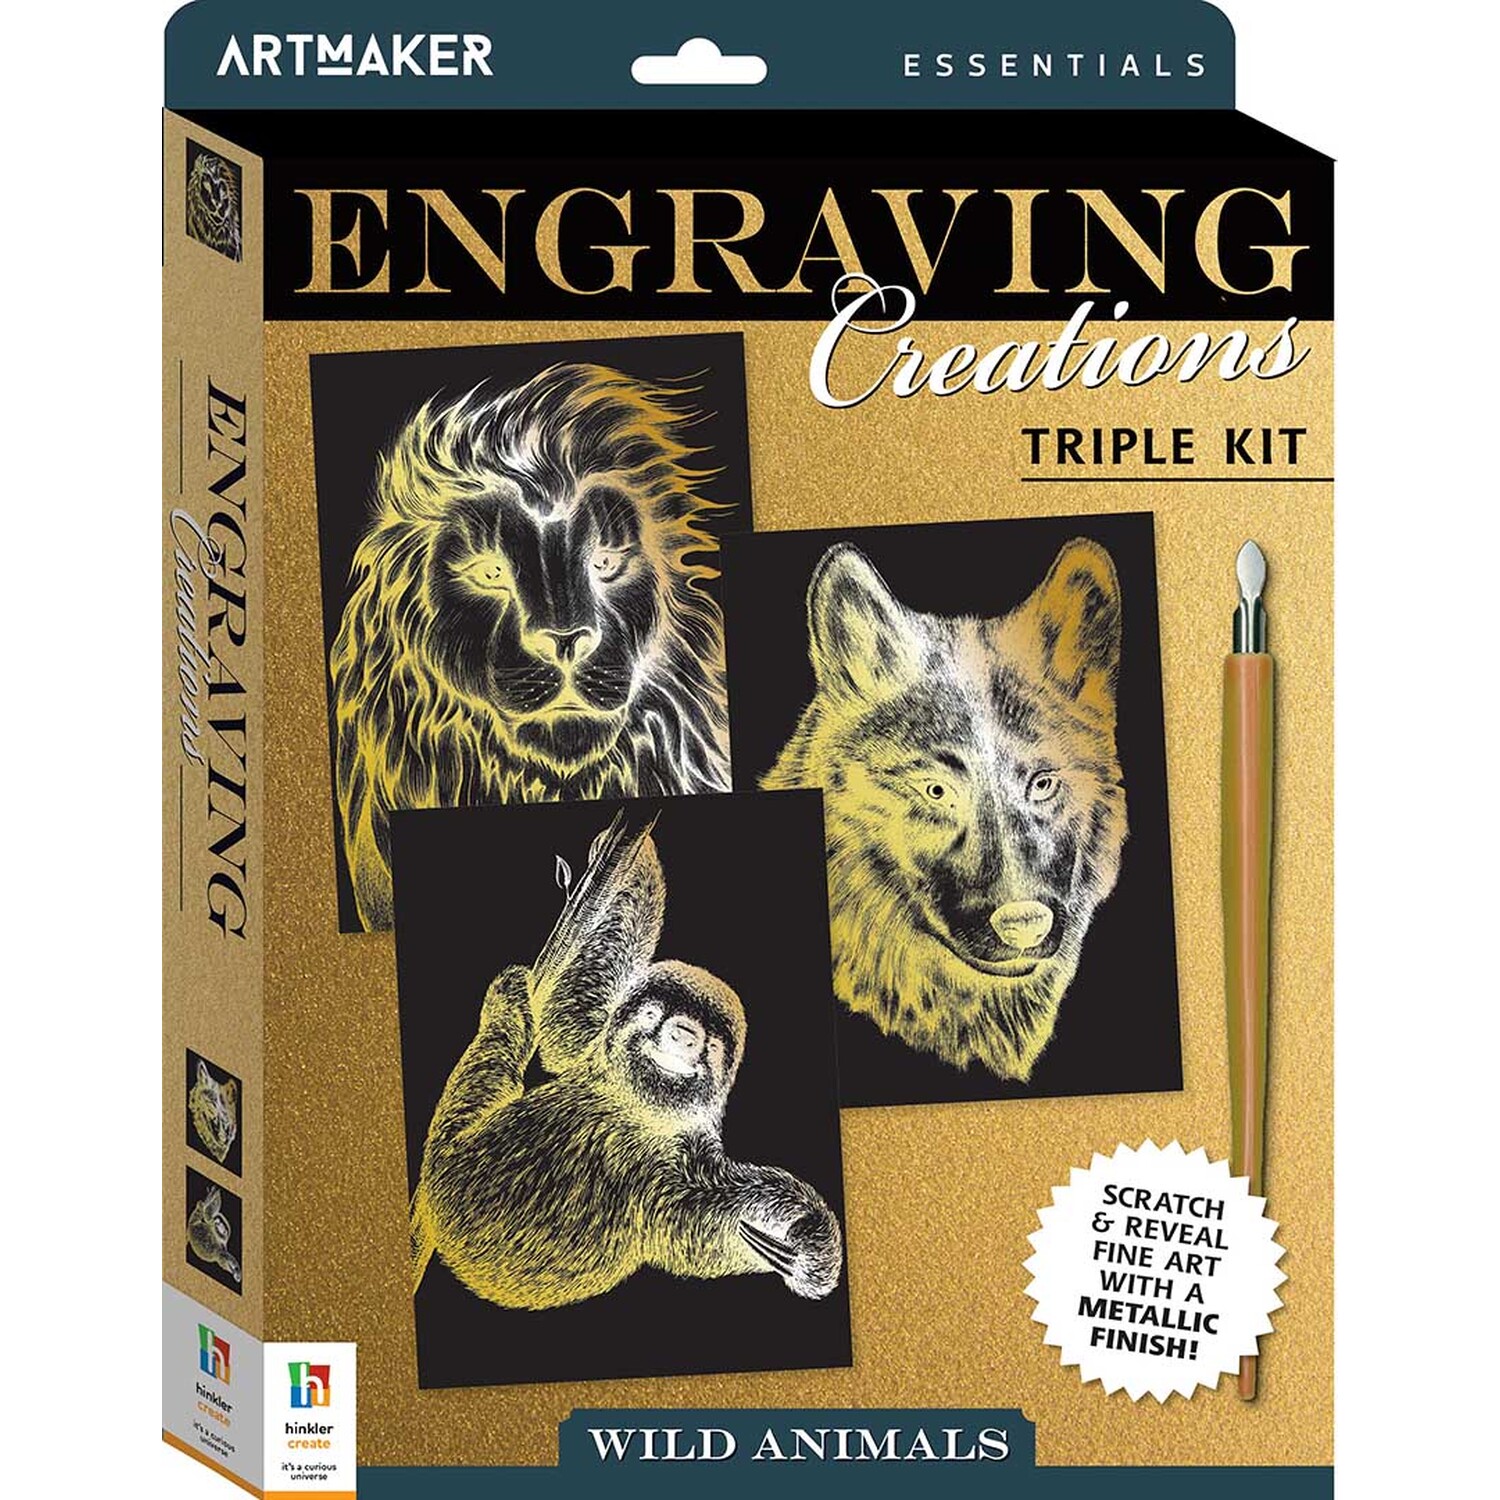 Engraving Creations Triple Kit - Wild Animals Image